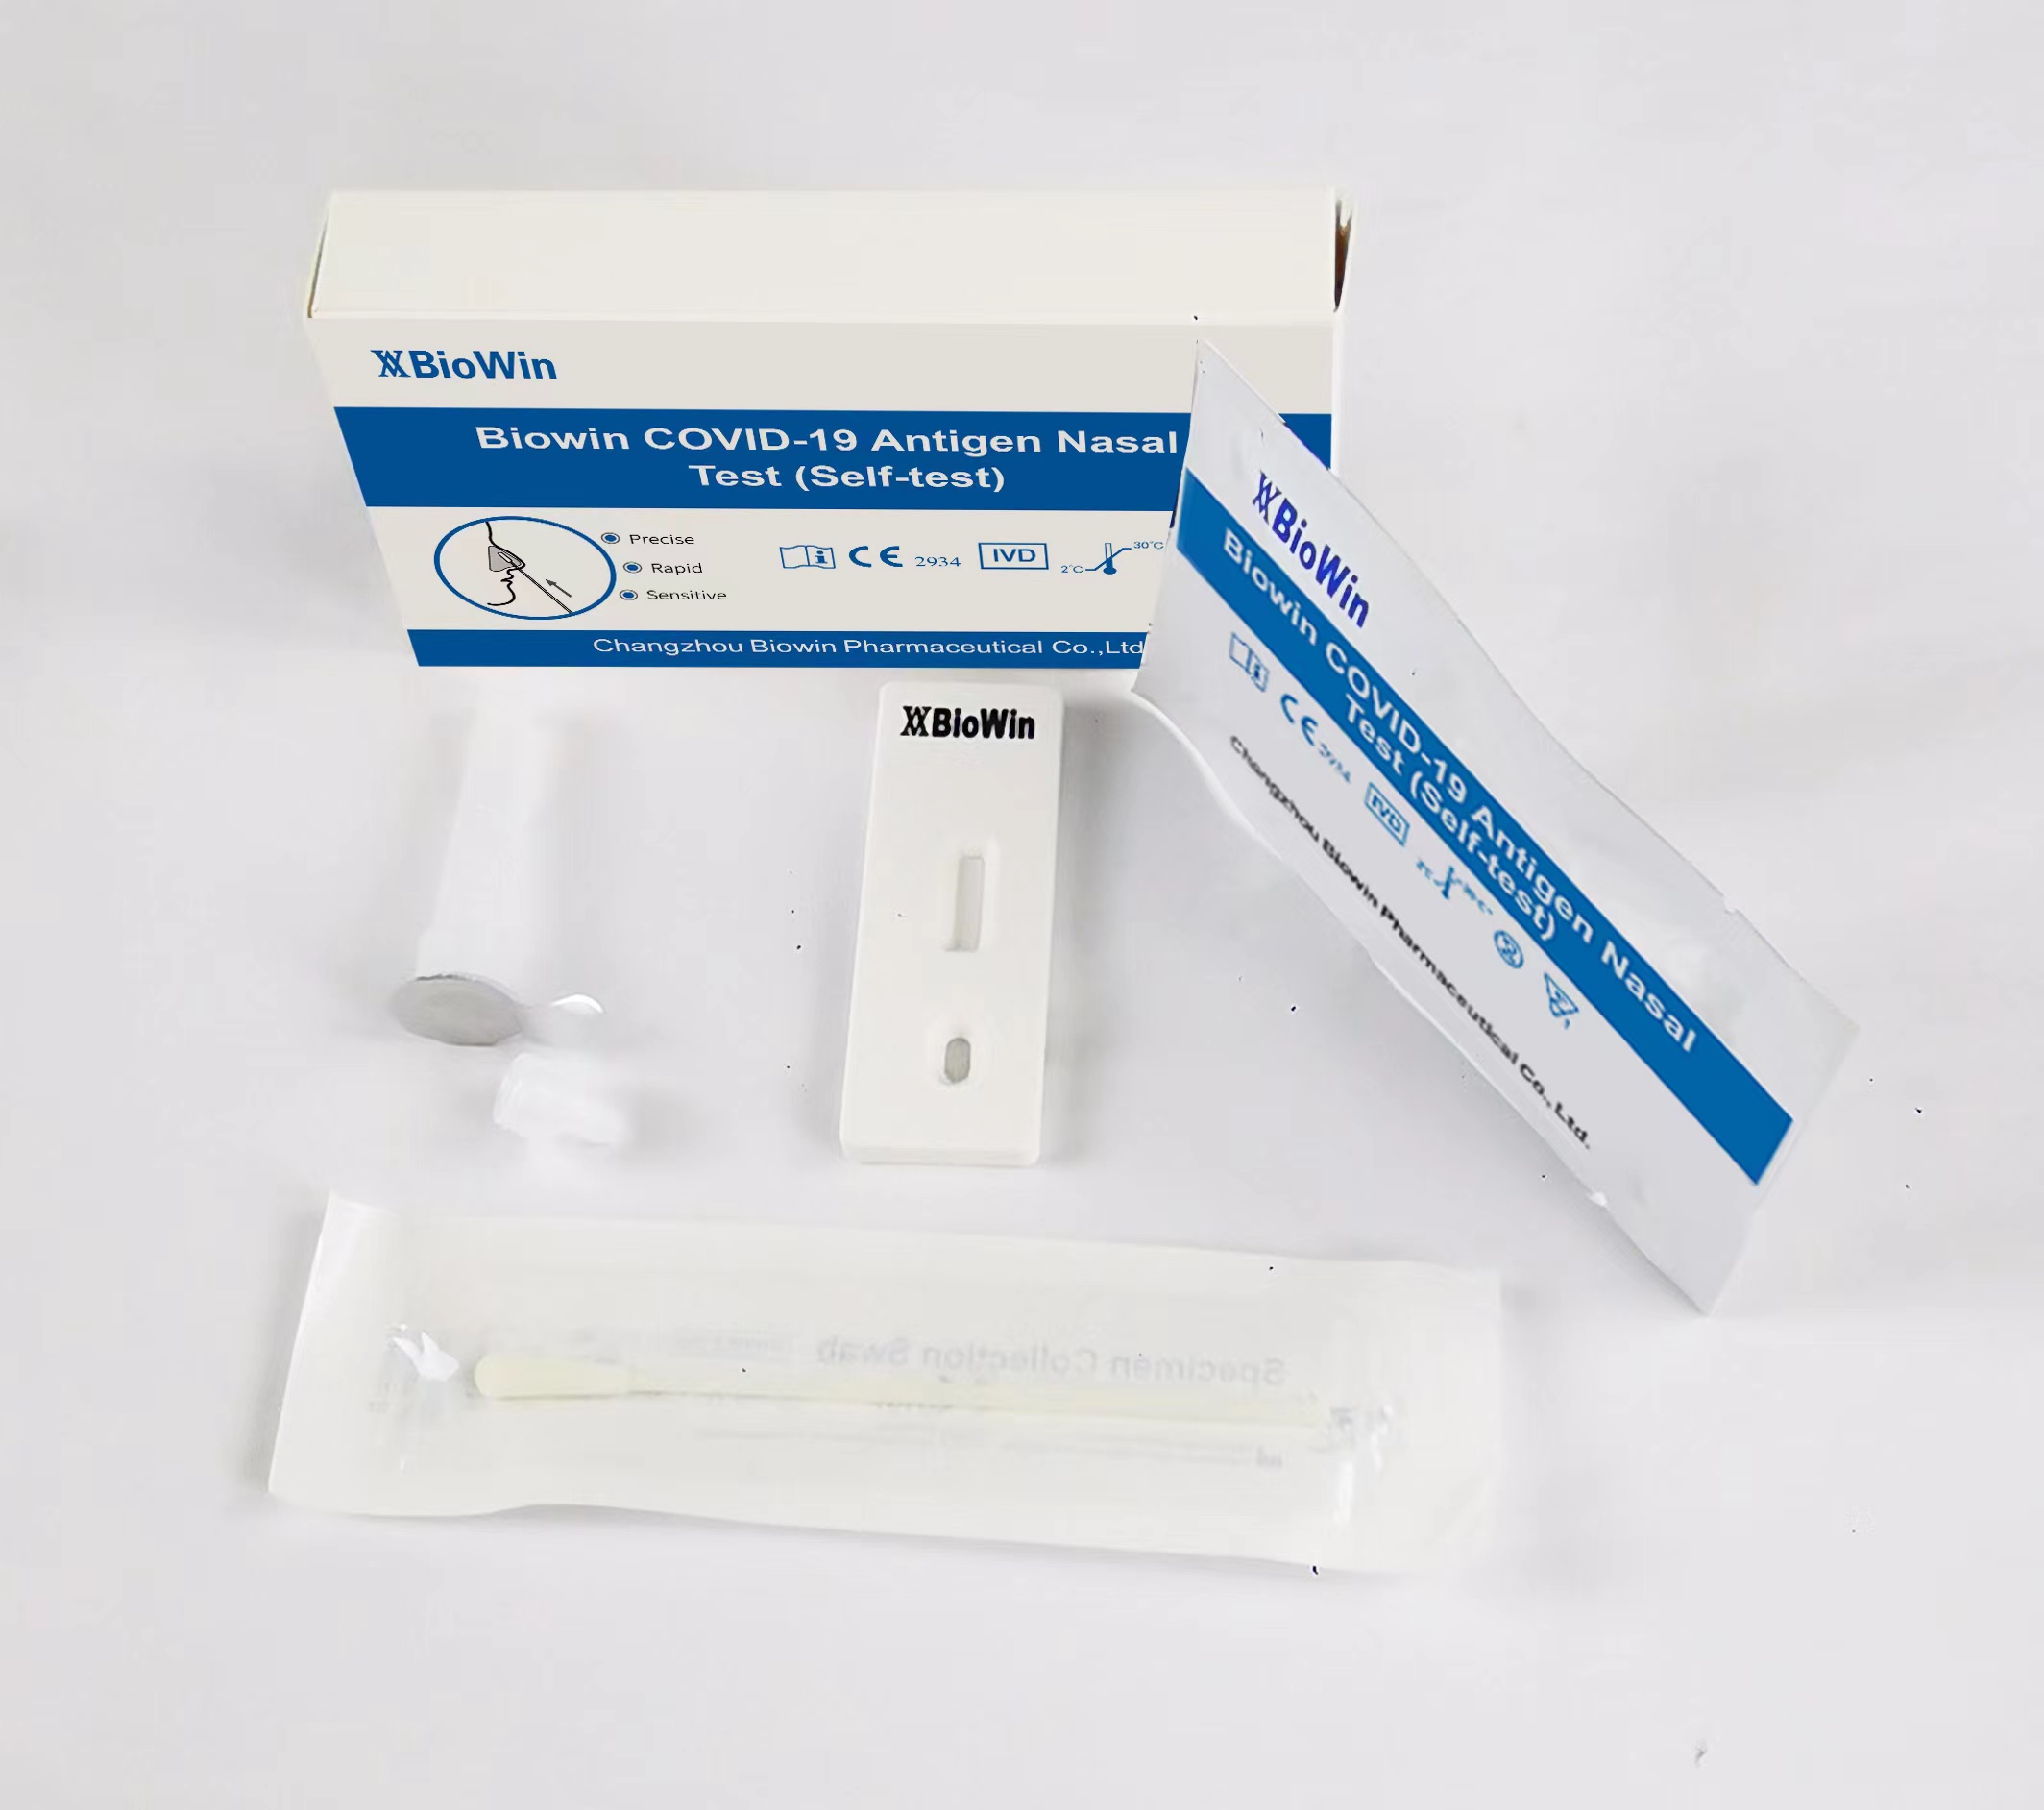 Biowin COVID-19 Antigen Nasal Test (Self-test)